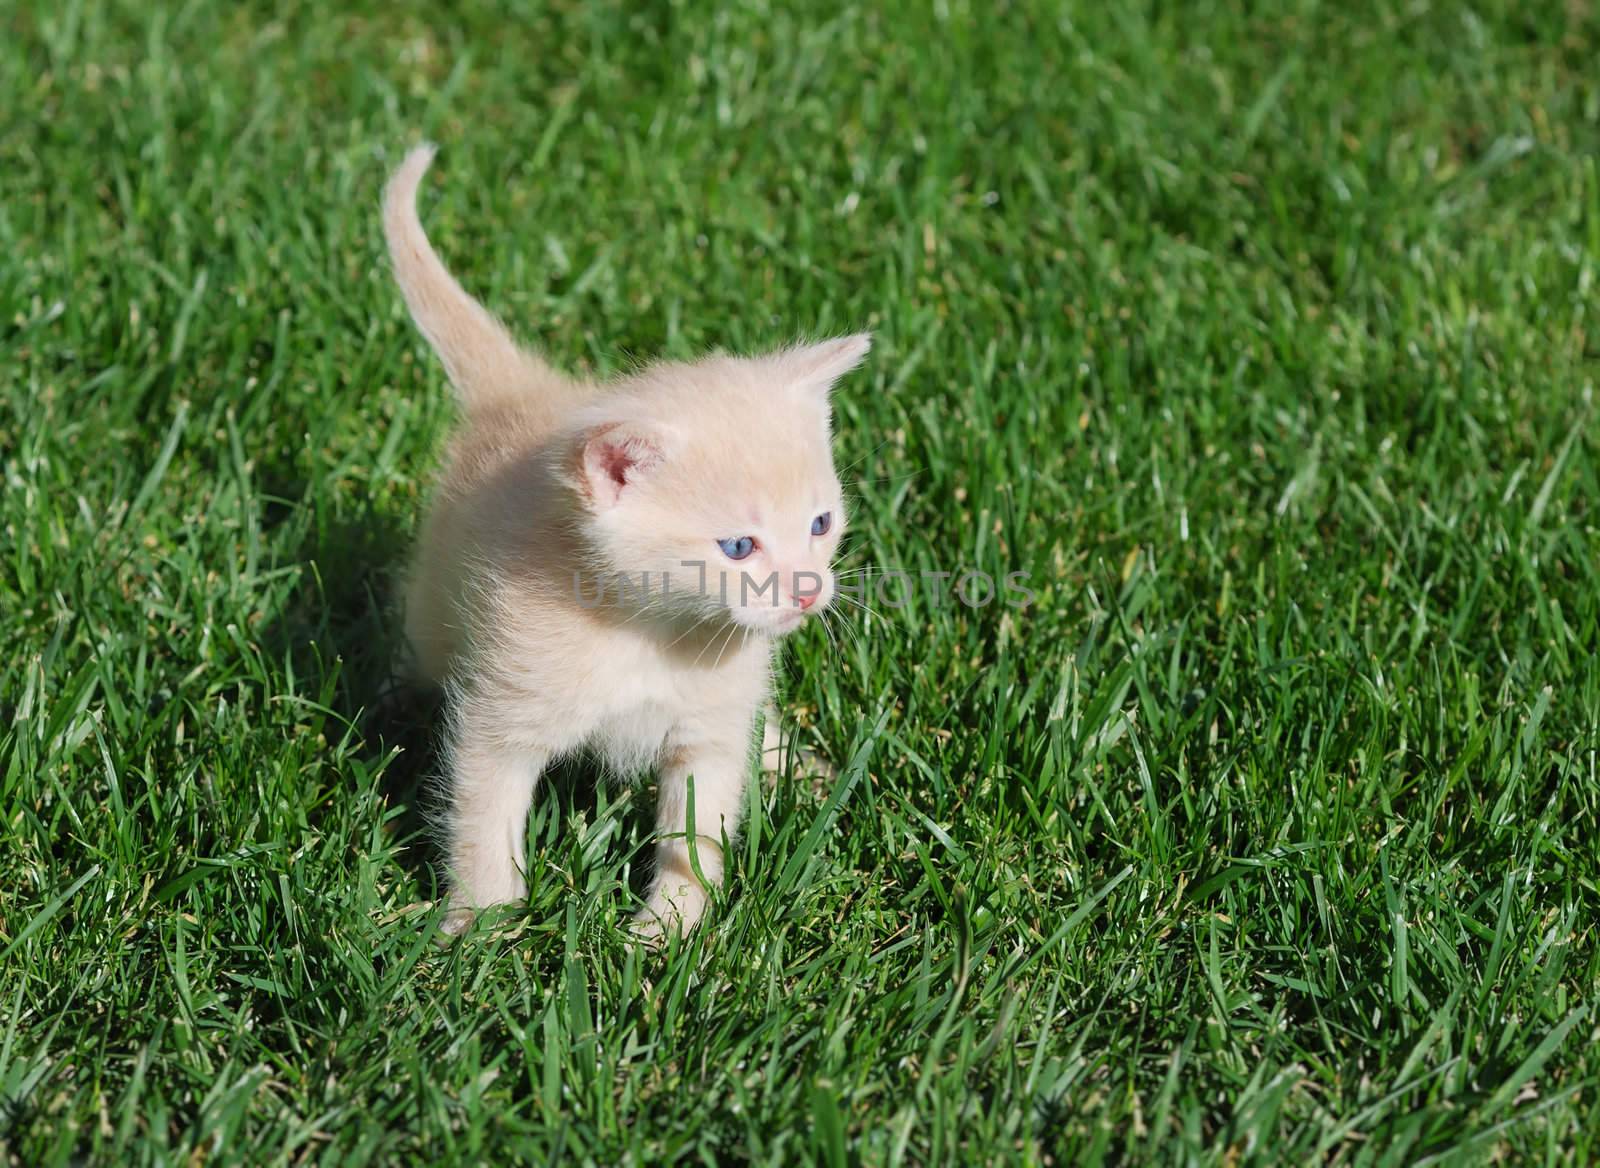 Yellow kitten with blue eyes walking through grass.